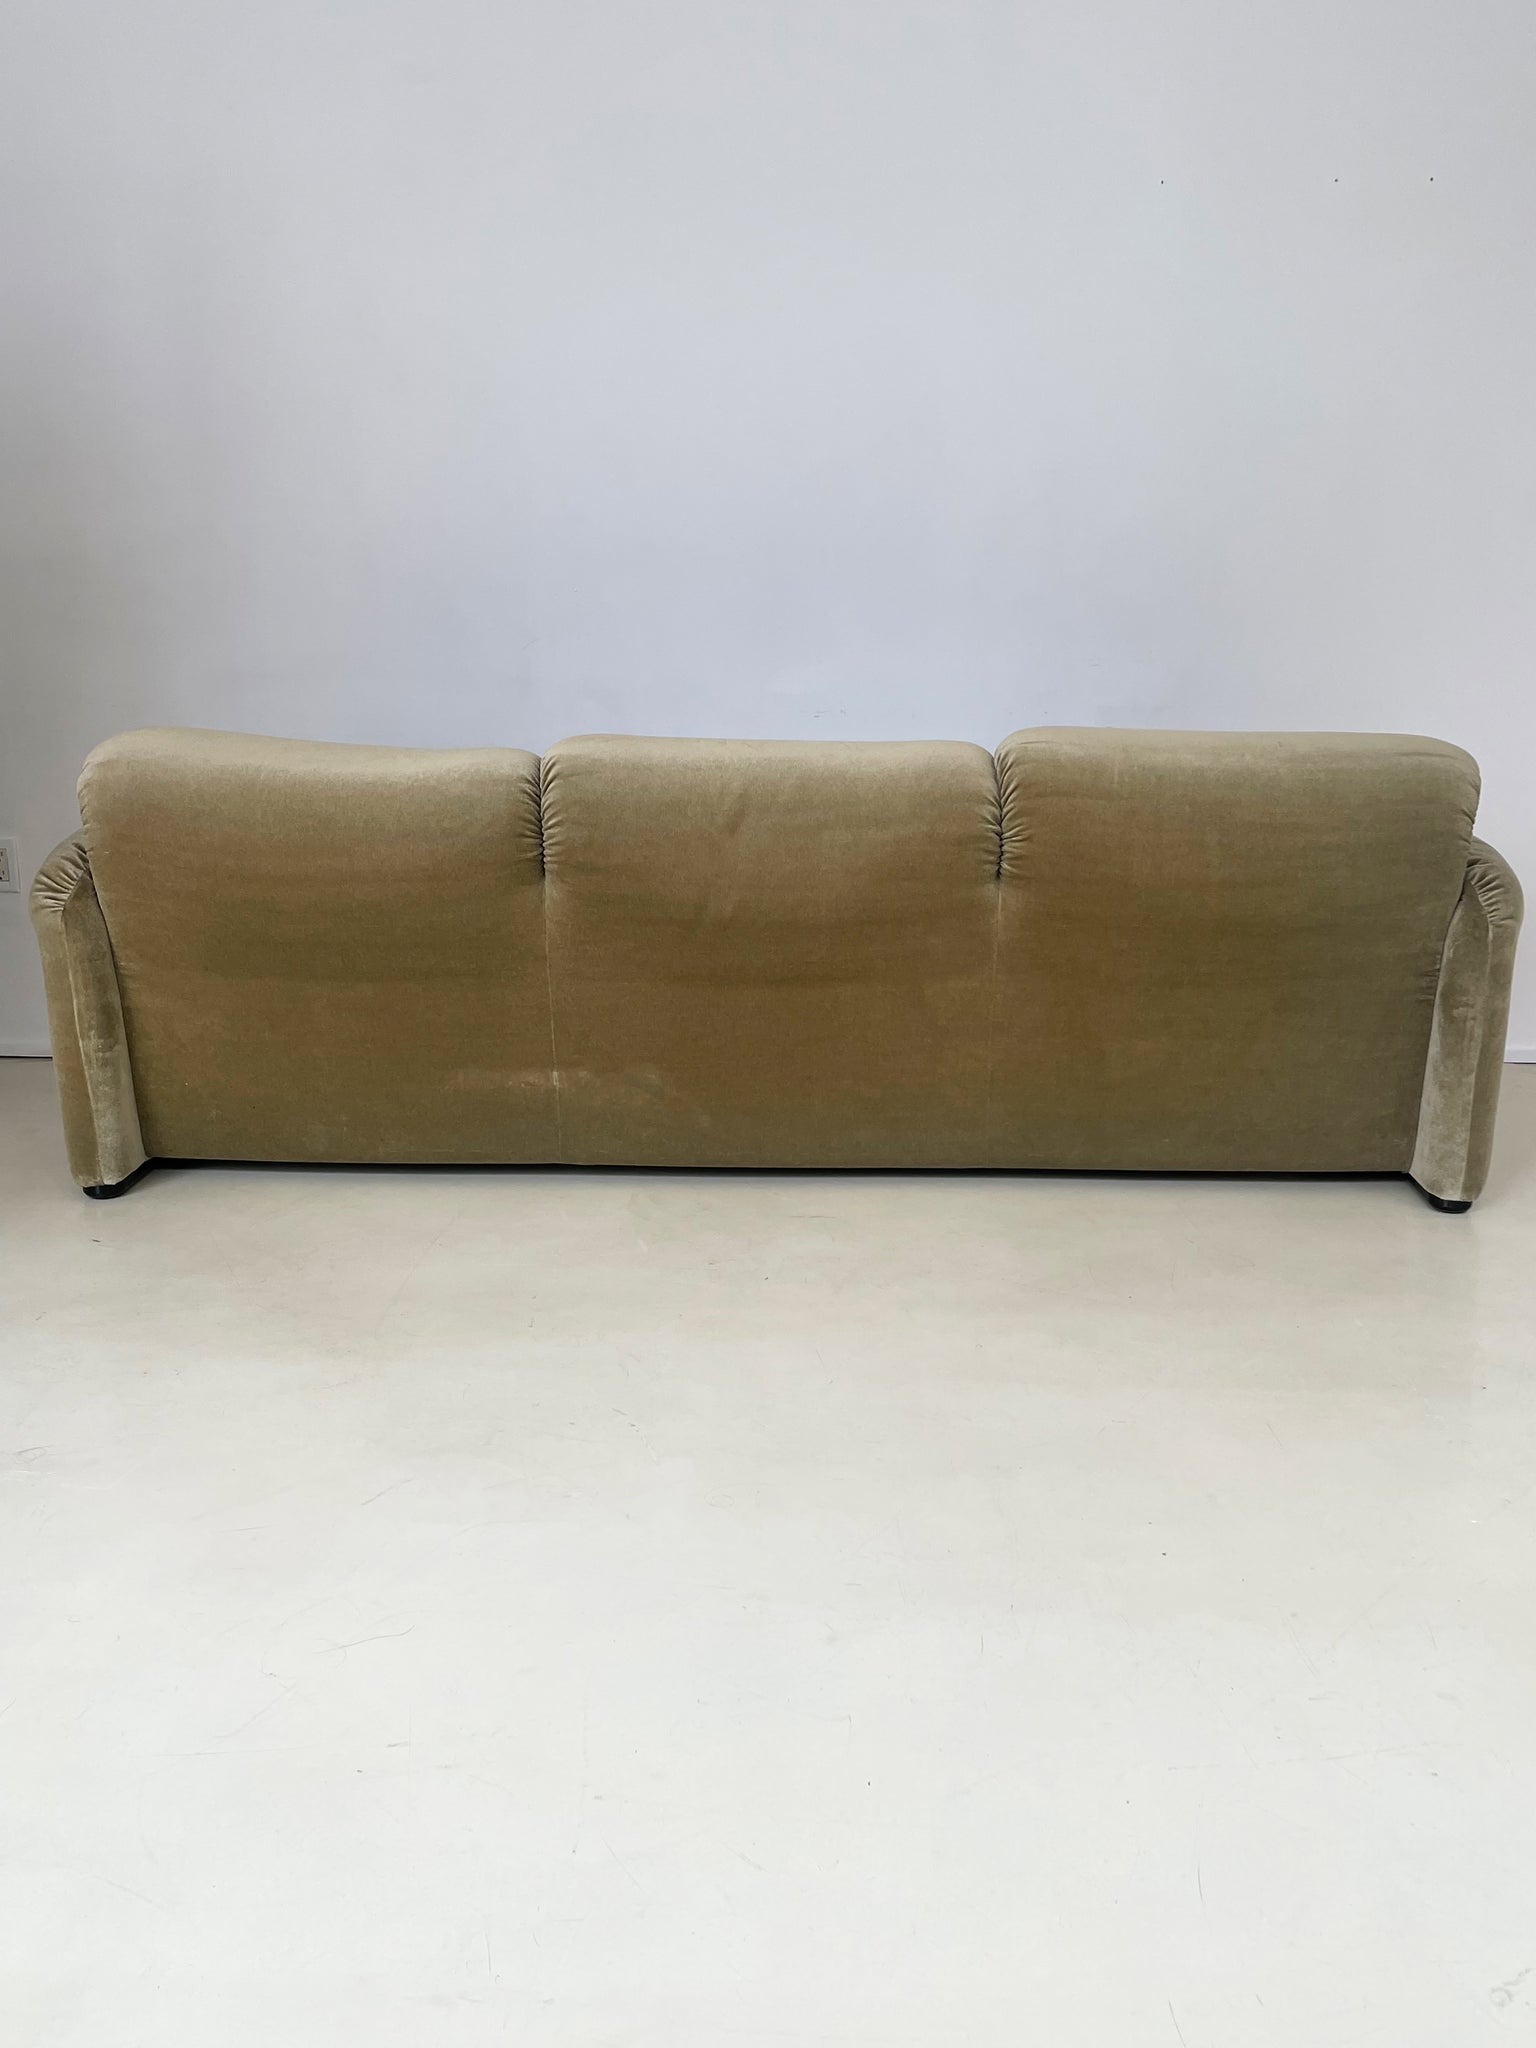 Sage "Maralunga" 3-seater Sofa by Vico Magistretti for Cassina.